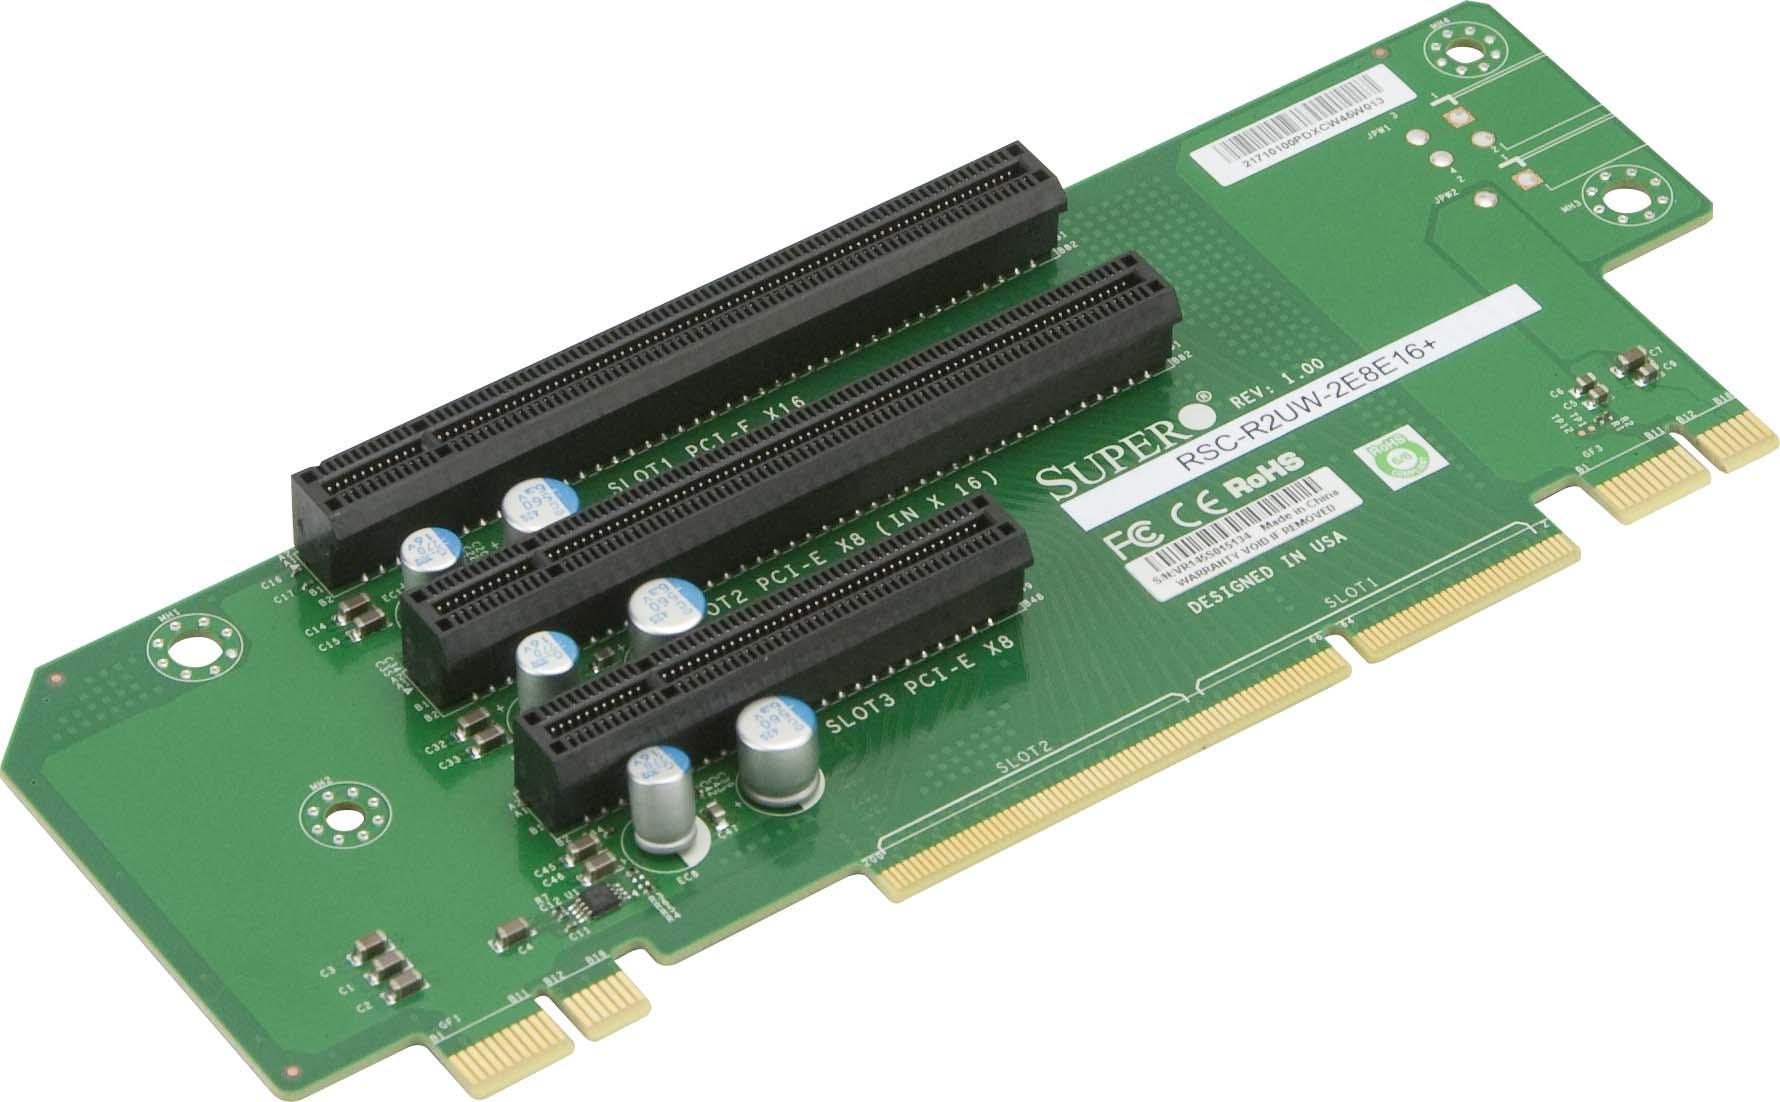 Плата расширенная. Слот PCI-ex1. Слот PCI адаптер Riser Card. Supermicro плата расширения. PCI-E плата расширения u2.